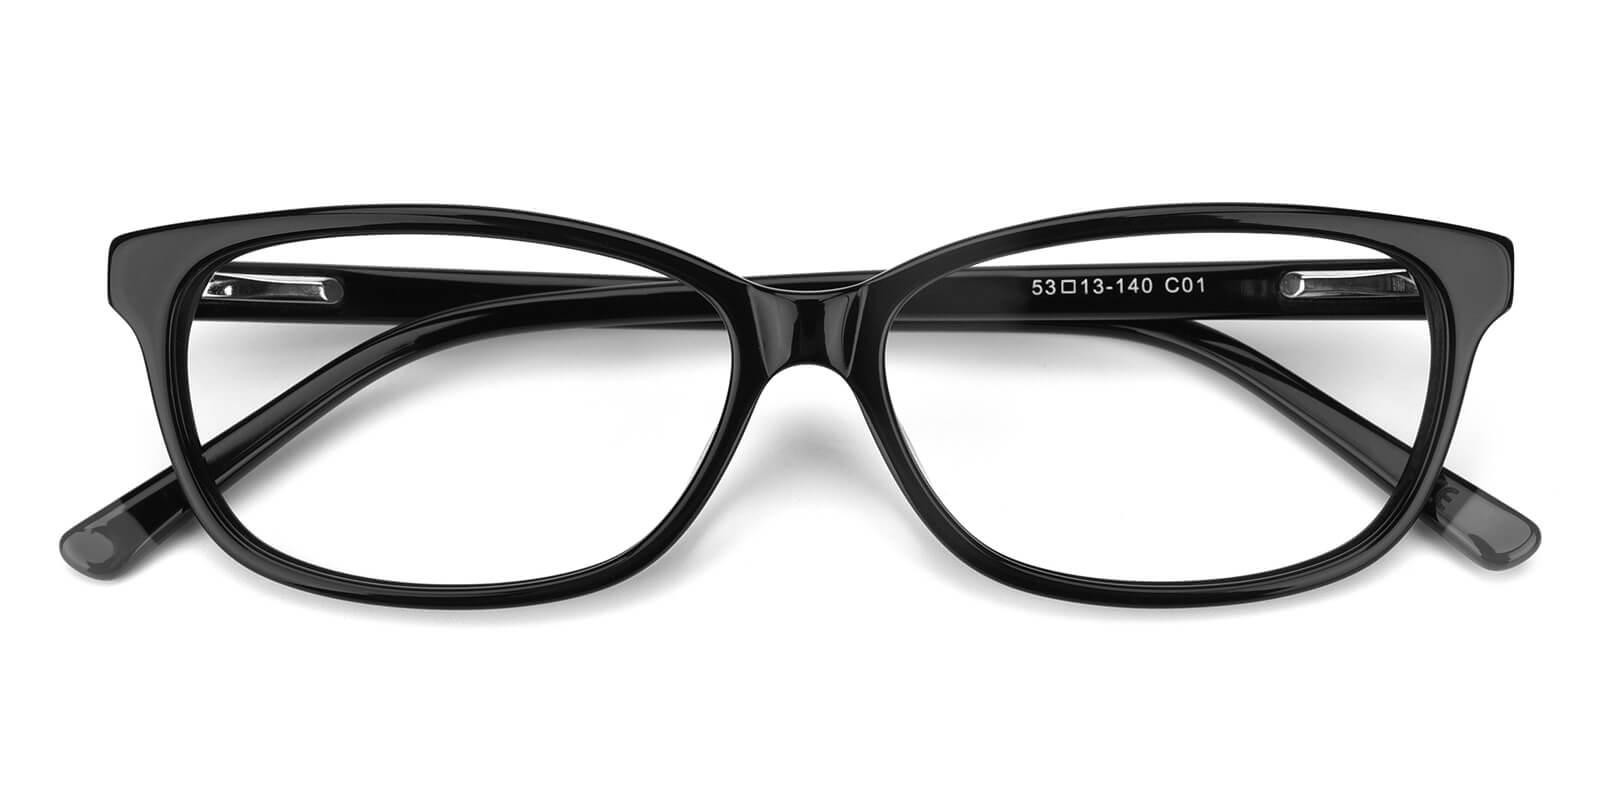 Zion-Black-Rectangle-Acetate-Eyeglasses-detail